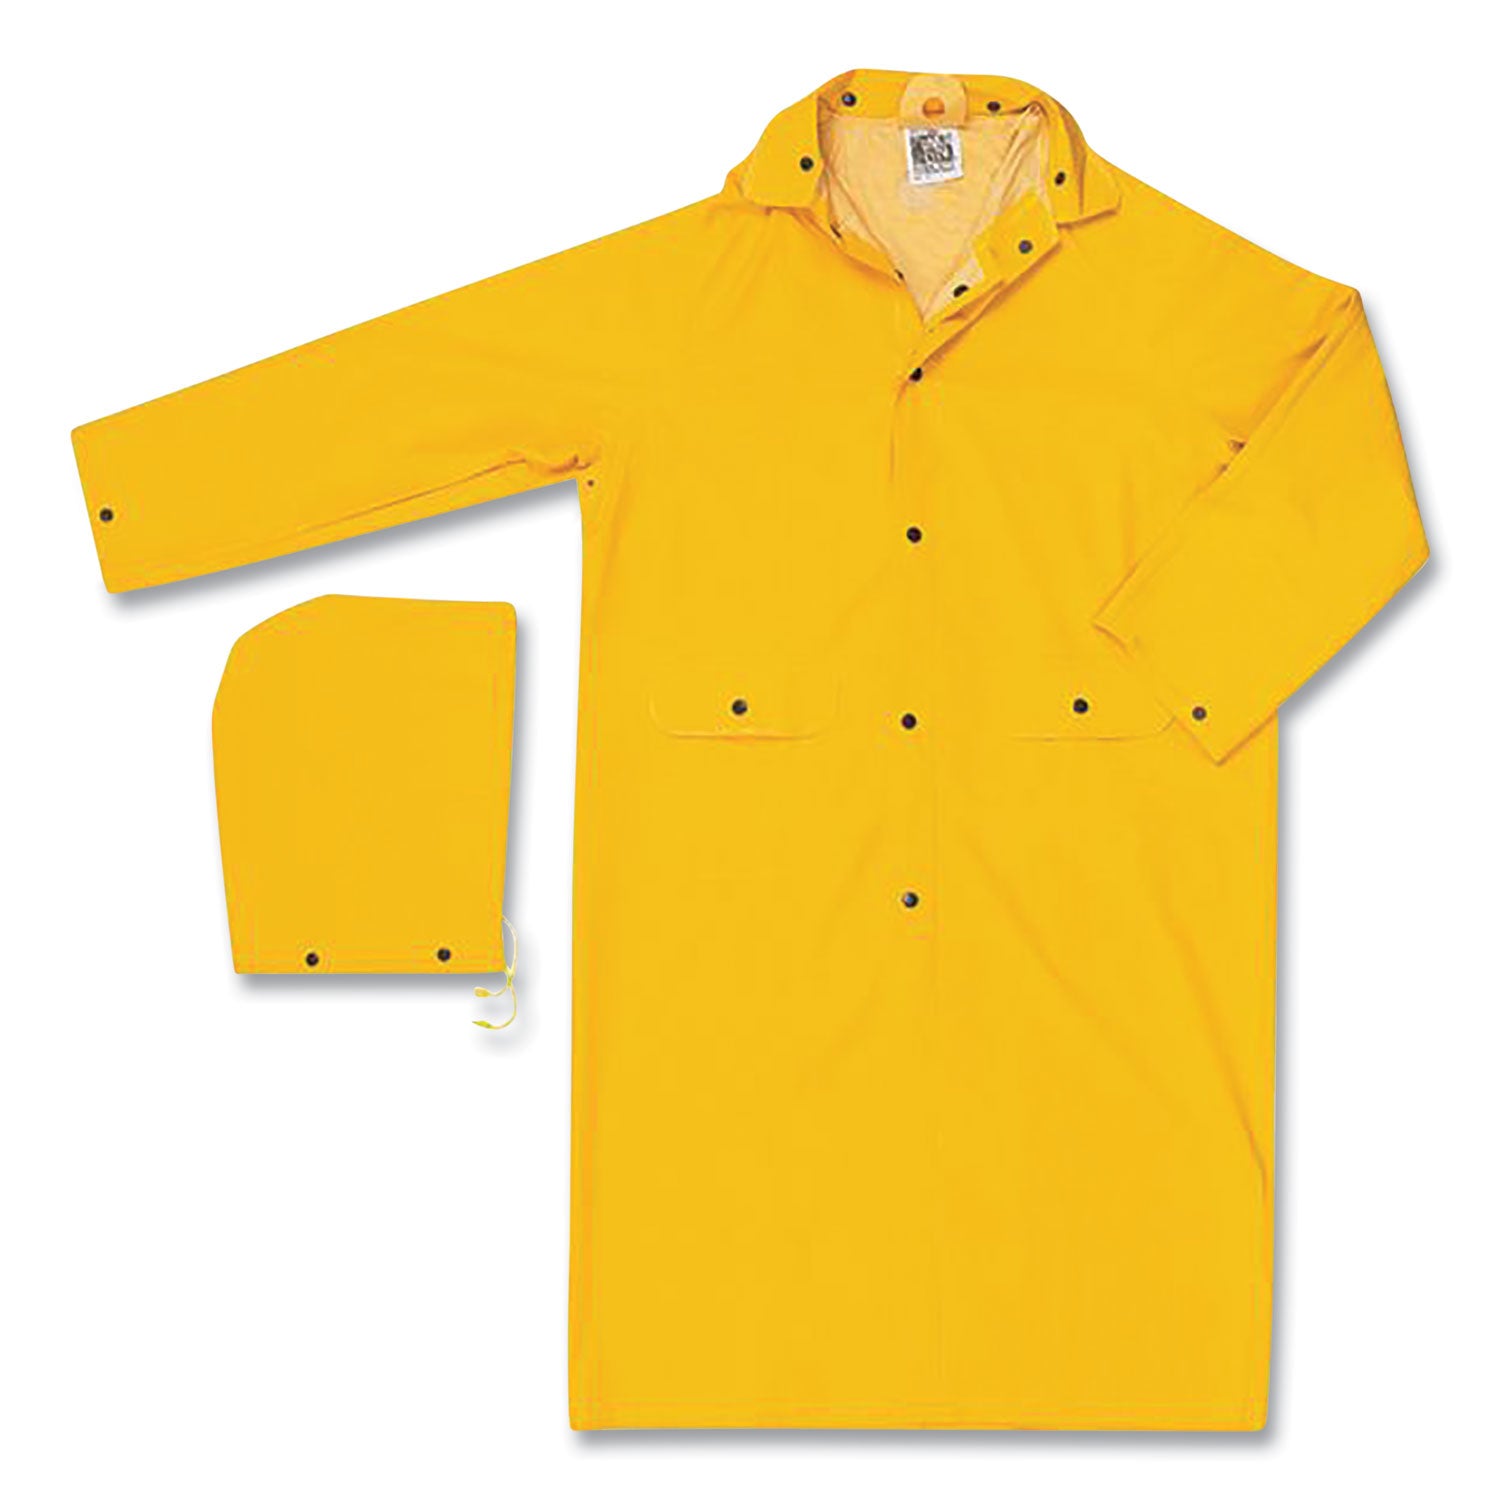 200c-yellow-classic-rain-coat-2x-large_rvr200cx2 - 1